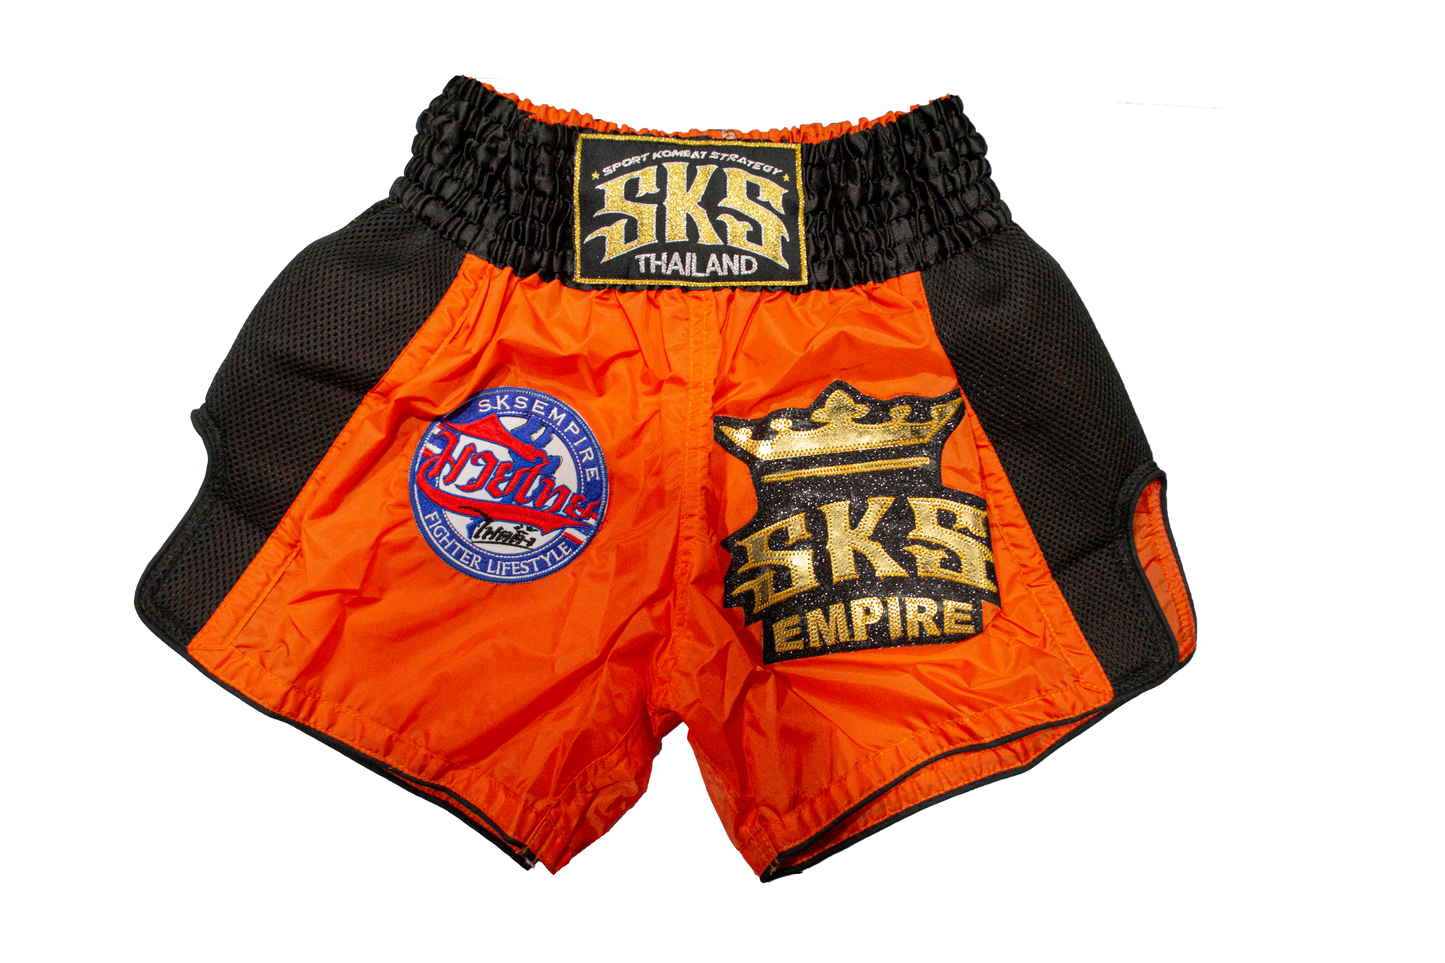 SKS Empire UK SKS King Shorts (Orange) at £50